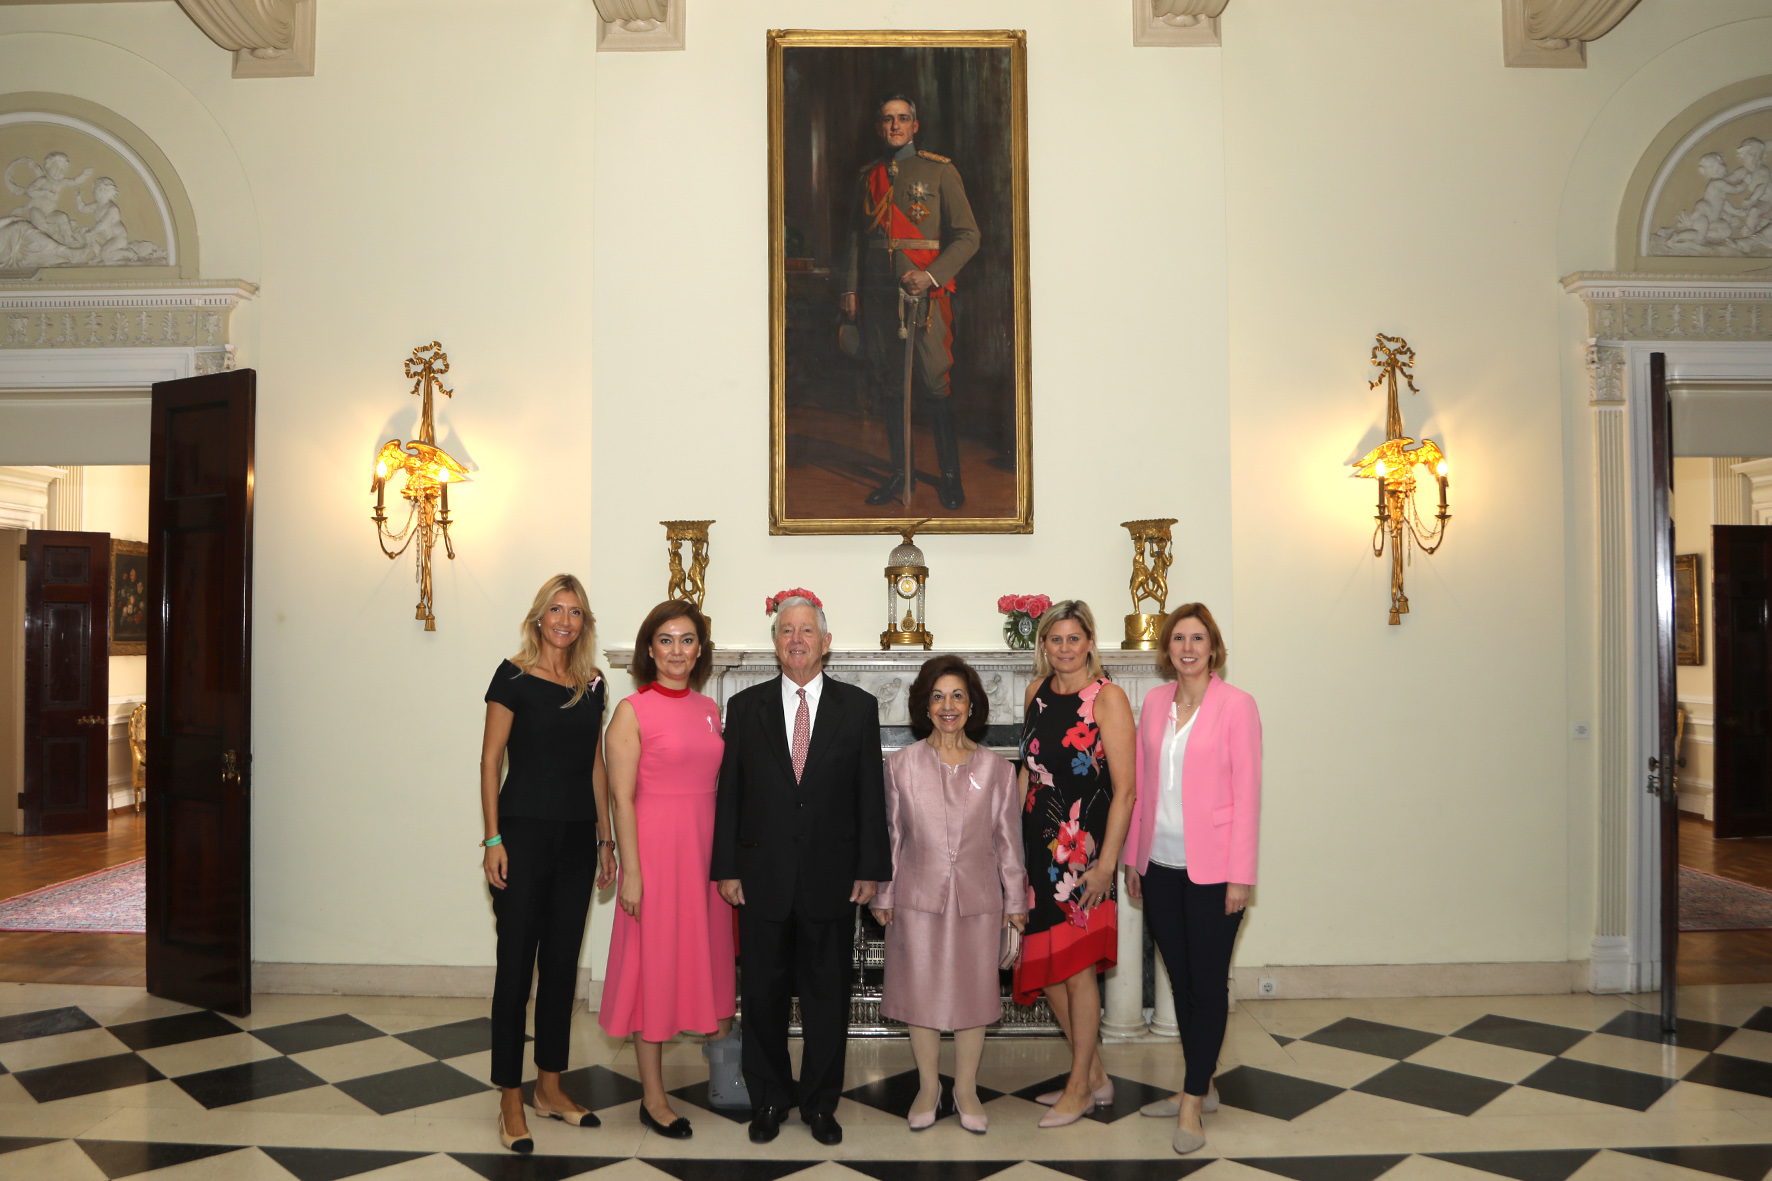 Their Royal Highnesses with Dr. Katarina Bajec, Mrs. Feyza Ozturk, CEOs of Acibadem, and Mrs. Barbora Kuchtová, President of IWC